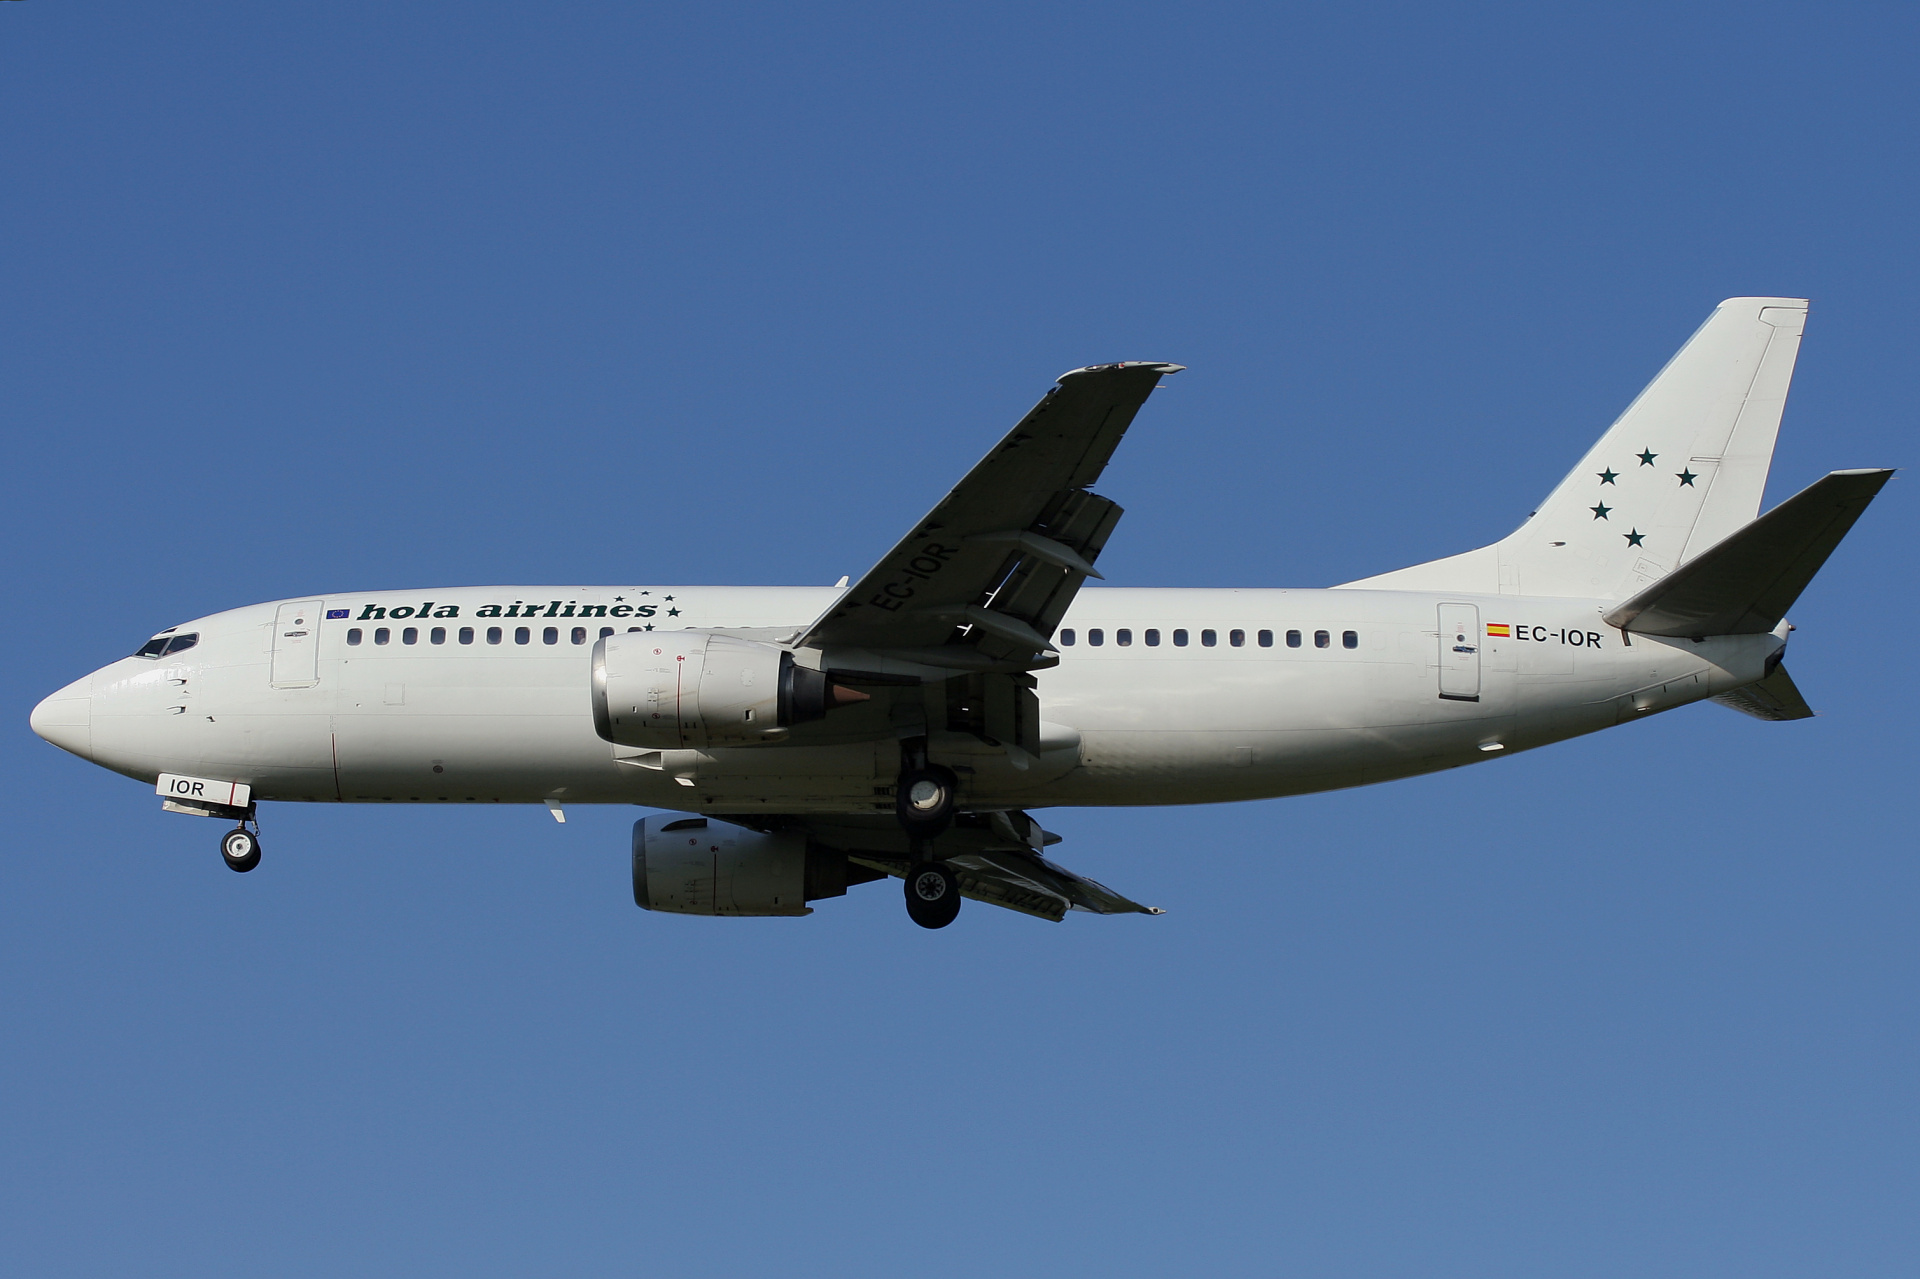 EC-IOR, Hola Airlines (Aircraft » EPWA Spotting » Boeing 737-300)